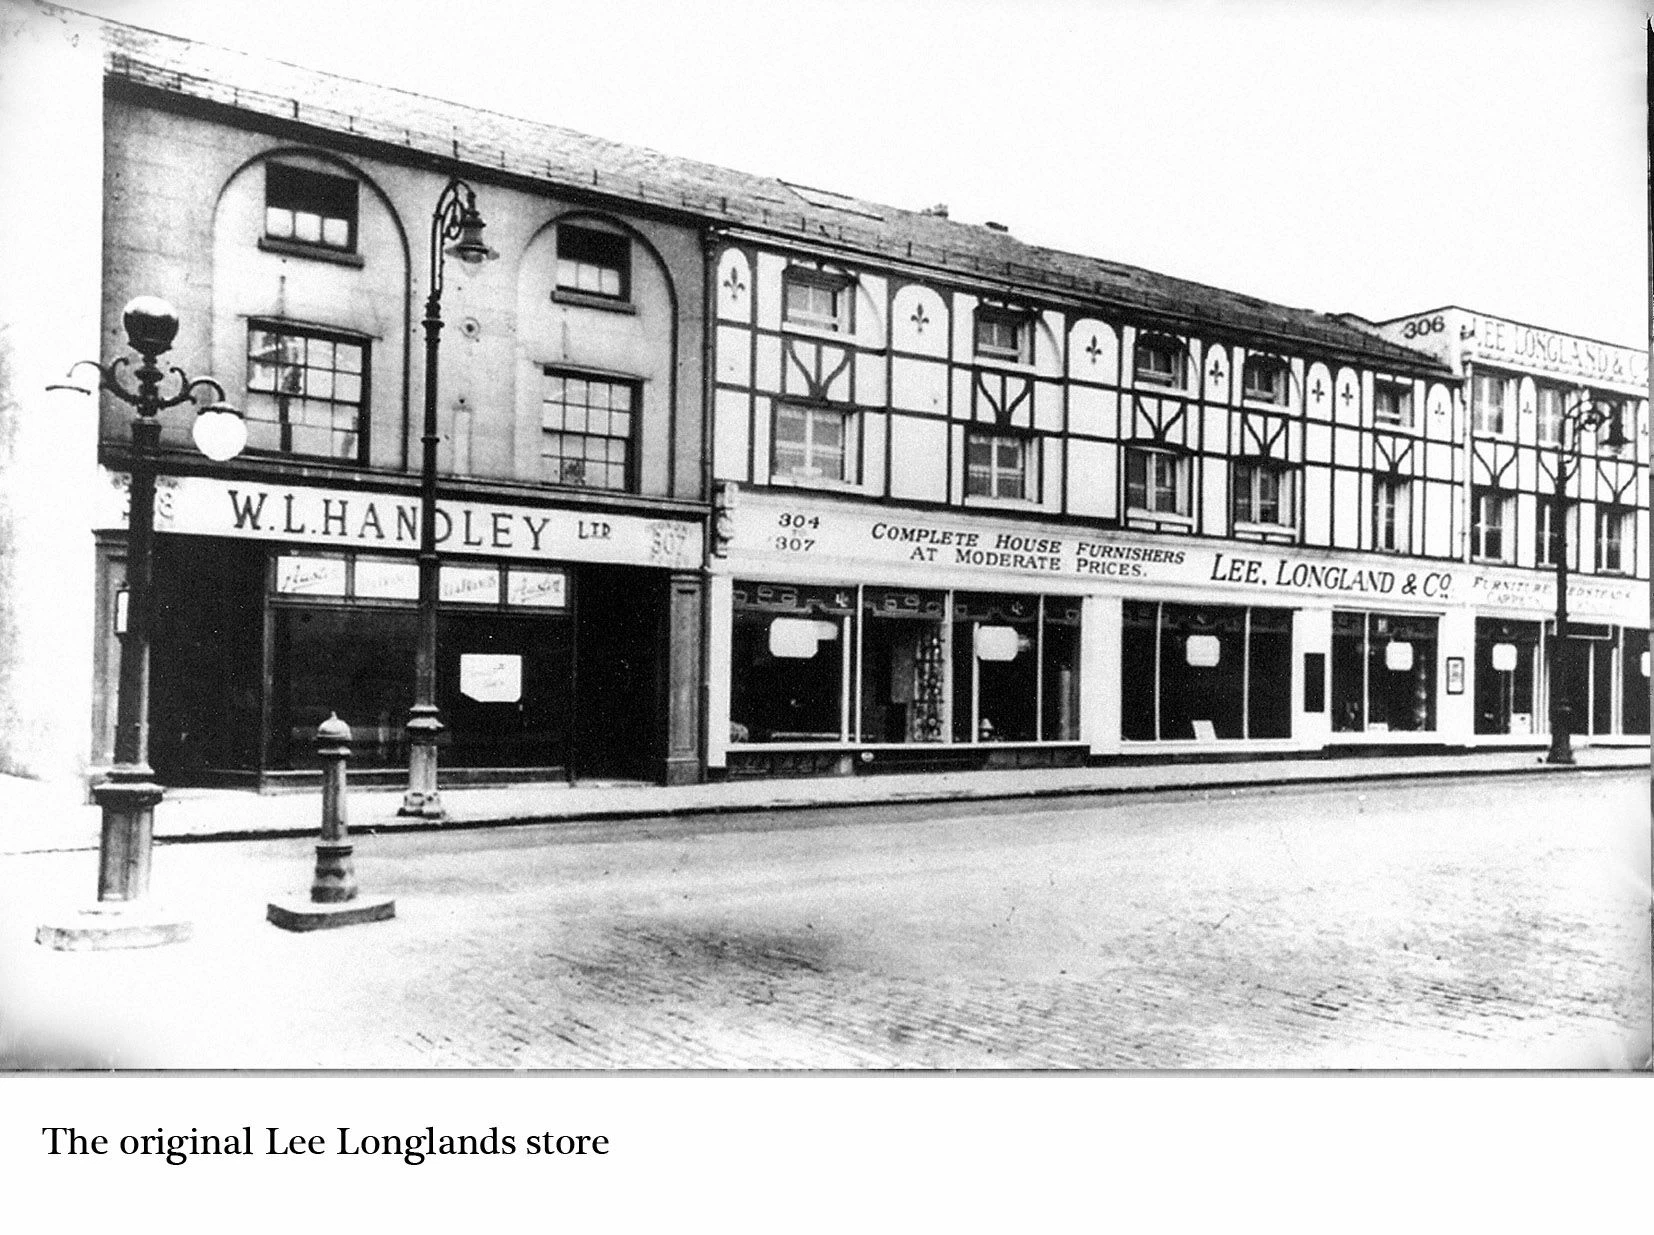 Lee Longlands original store